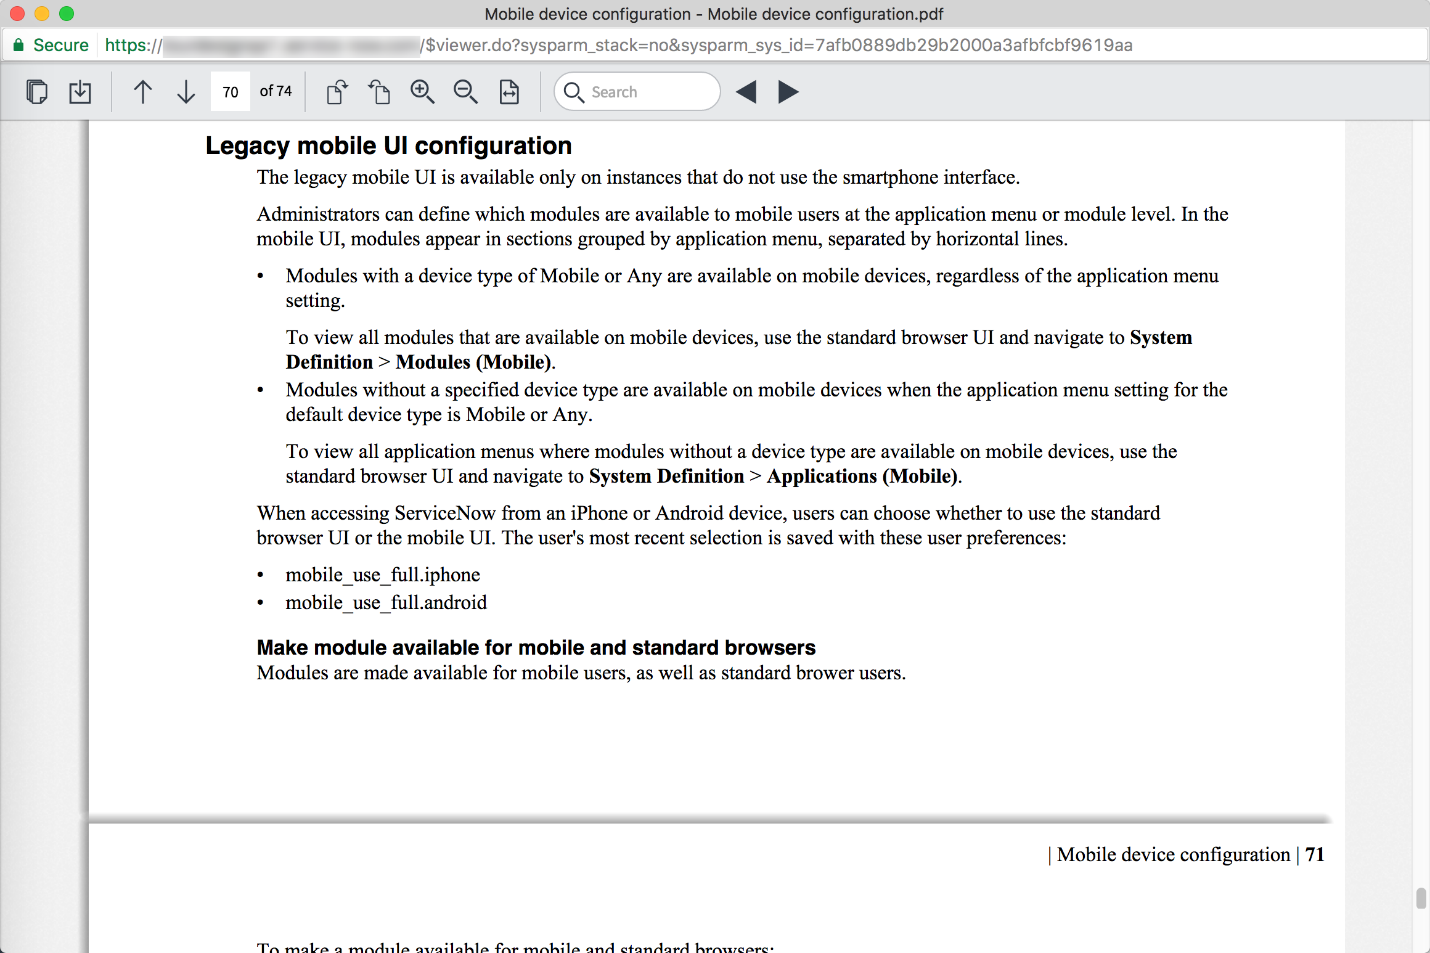 ServiceNow Madrid Document Viewer PDF view